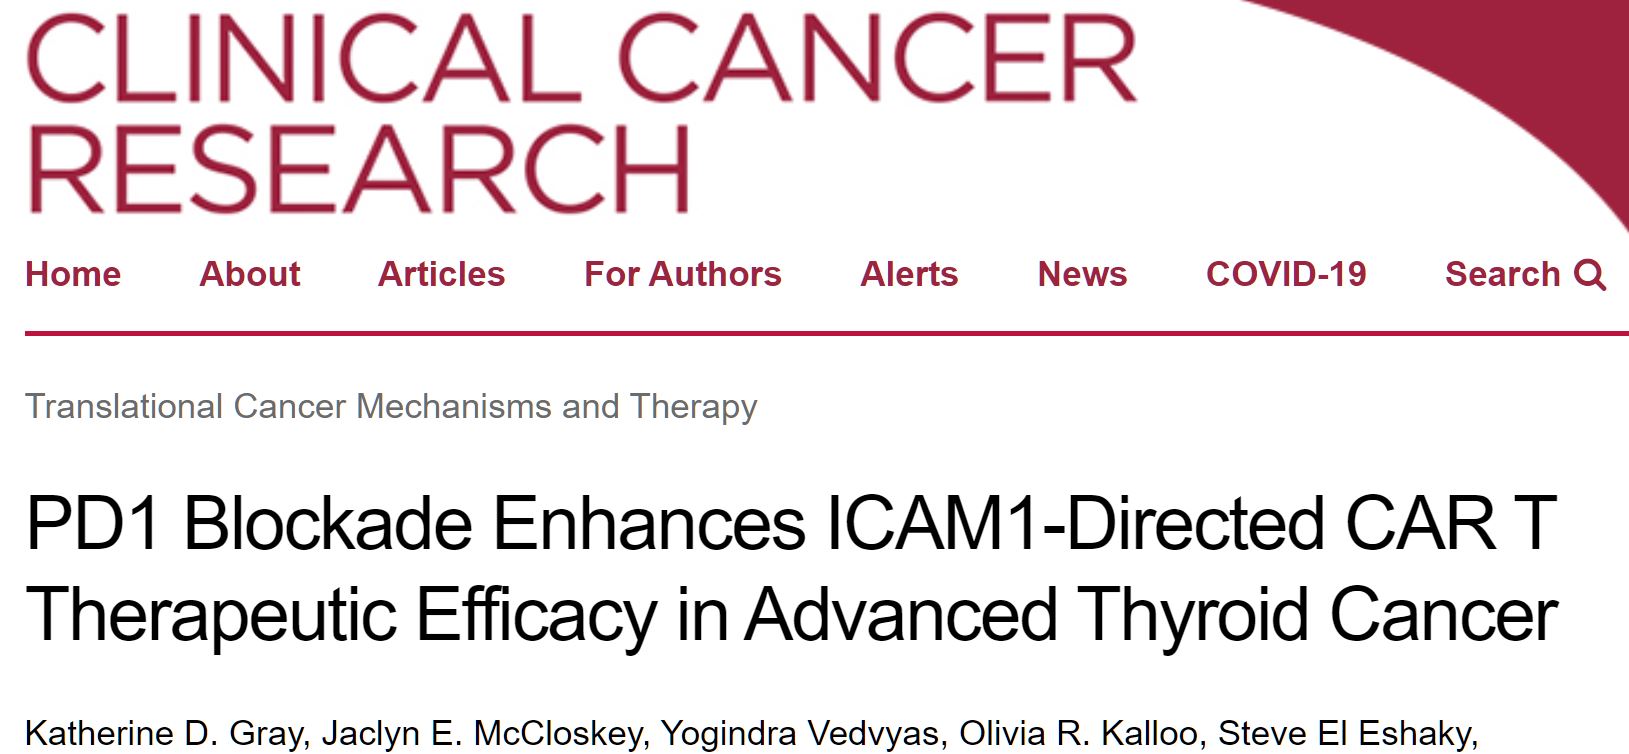 Clin Cancer Res：<font color="red">阻断</font>PD1可增强ICAM1靶向CAR T细胞治疗晚期甲状腺癌的疗效